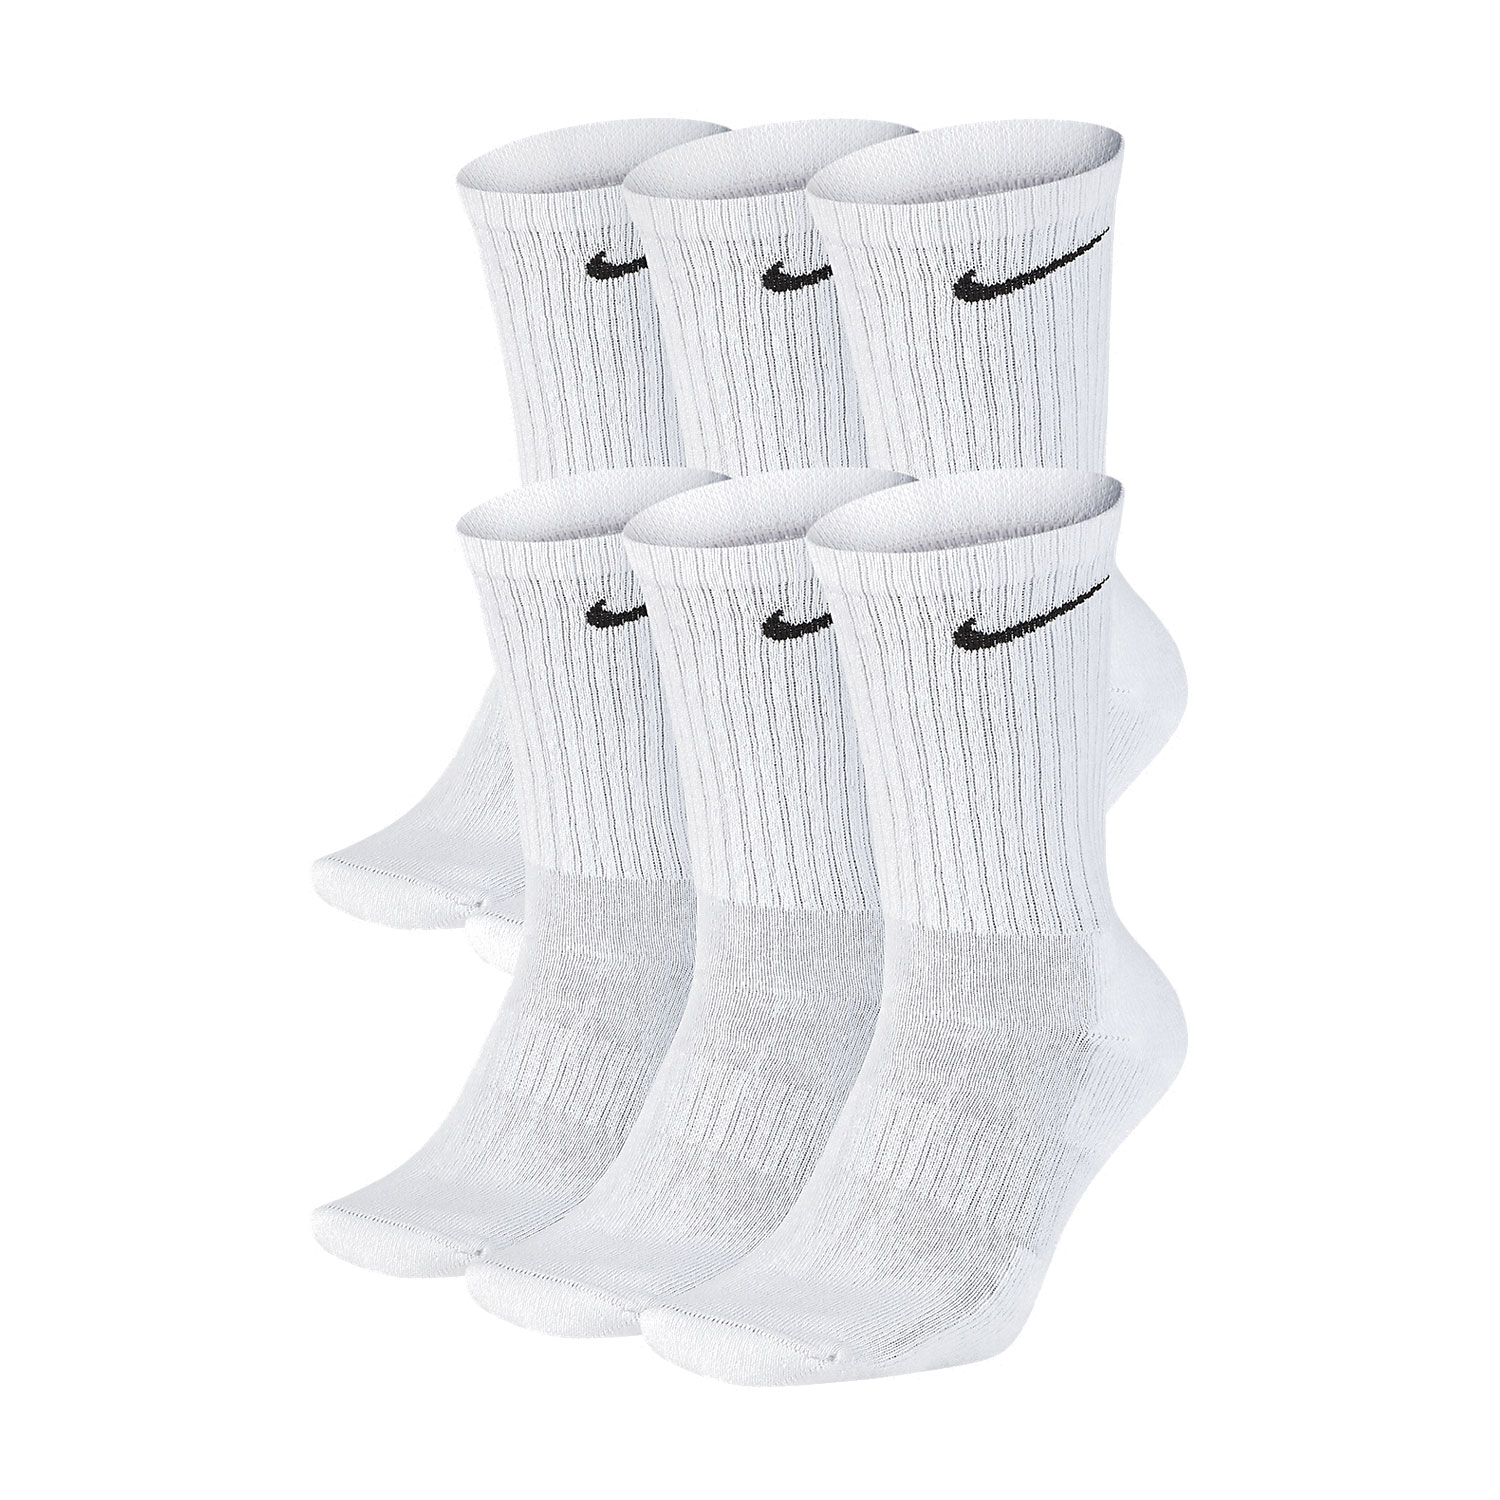 Nike Everyday Cushion Crew X 6 Socks - White/Black